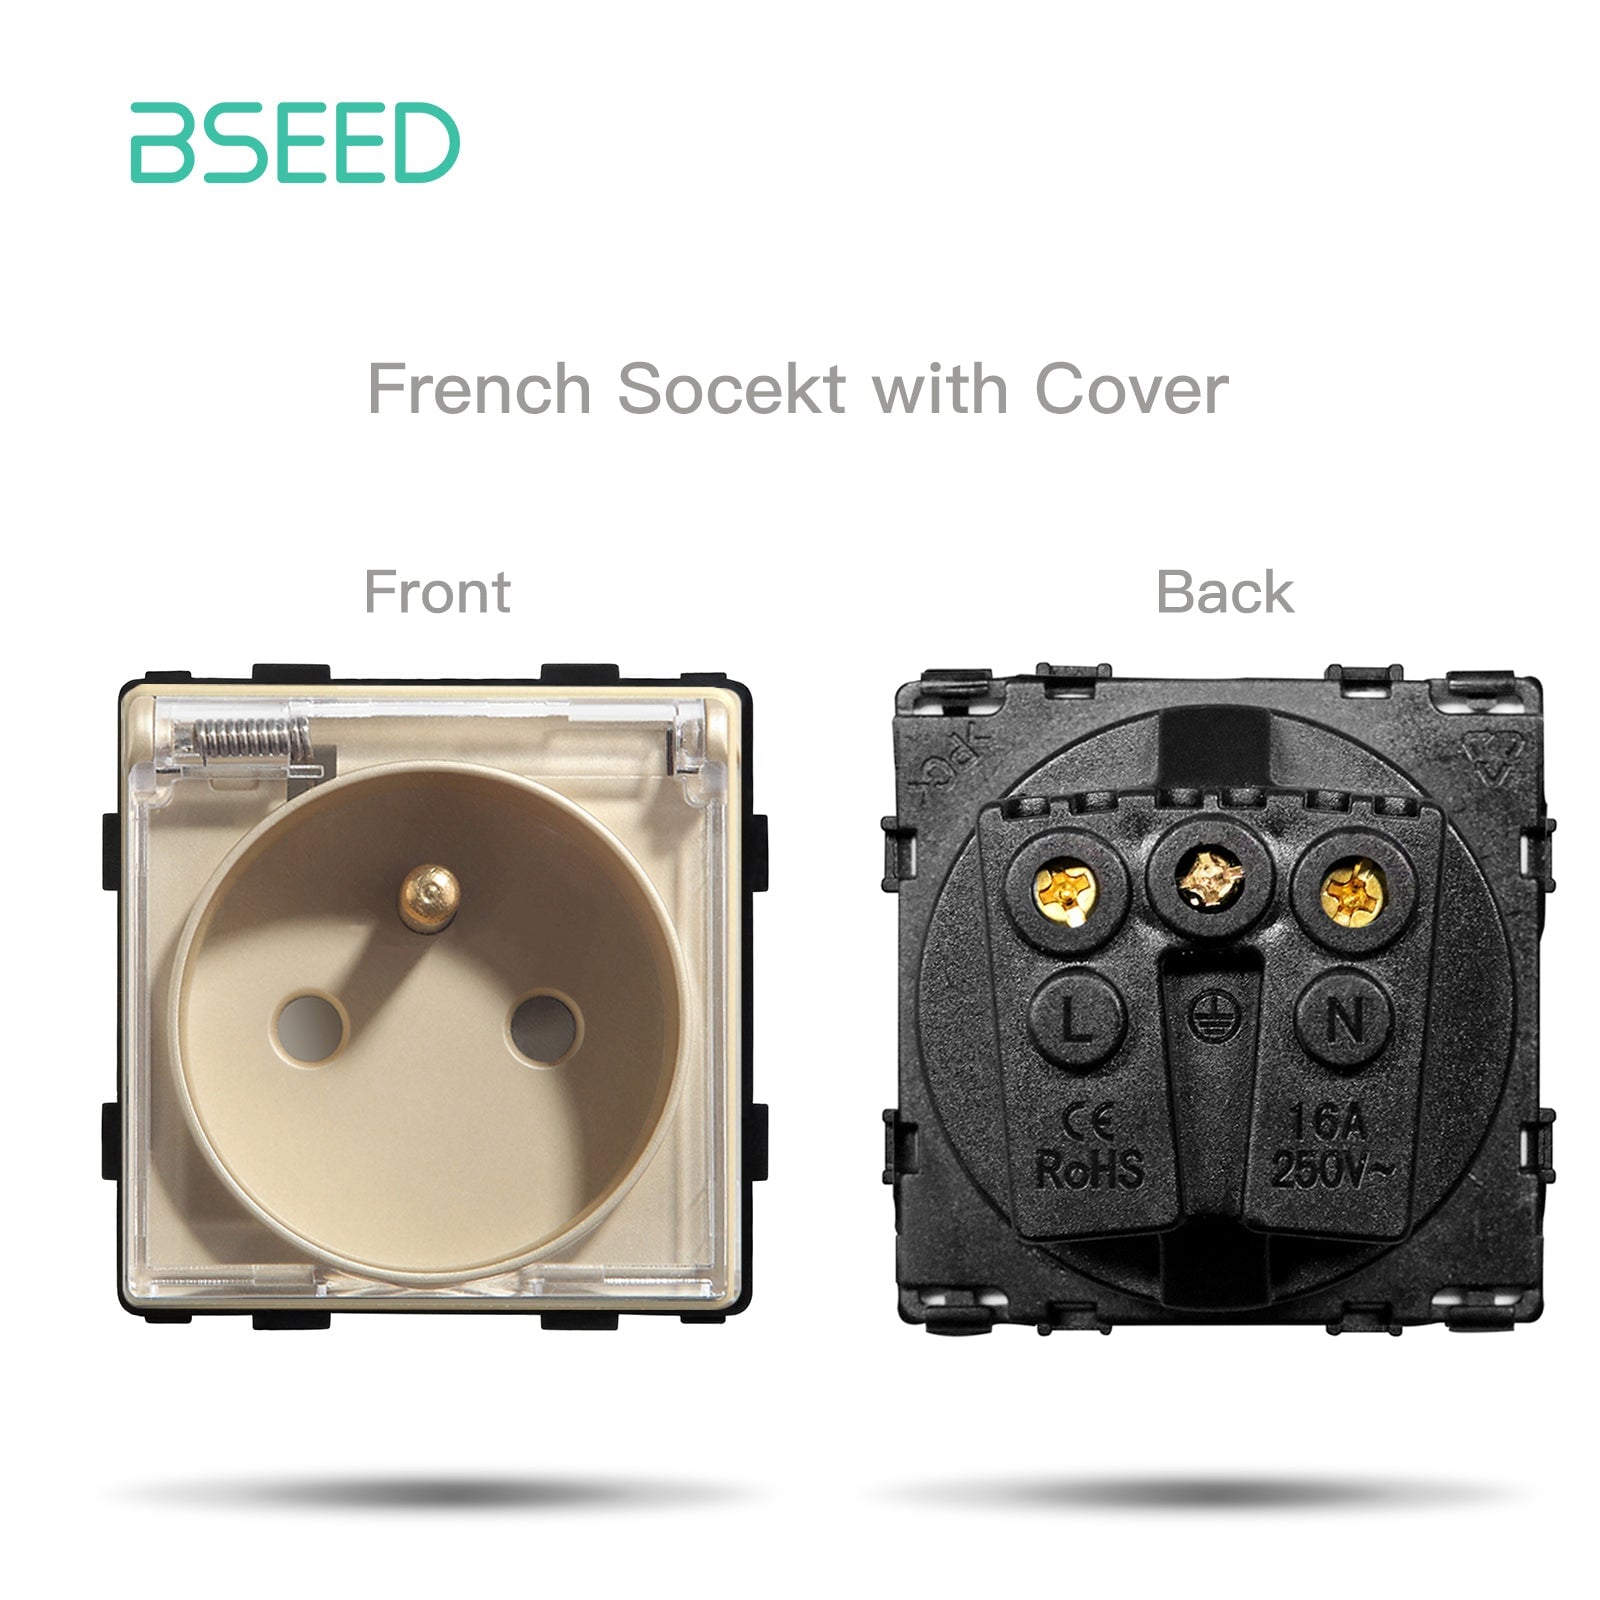 BSEED EU/FR standard Function Key Cover Socket DIY Parts Power Outlets & Sockets Bseedswitch GOLDEN FR 